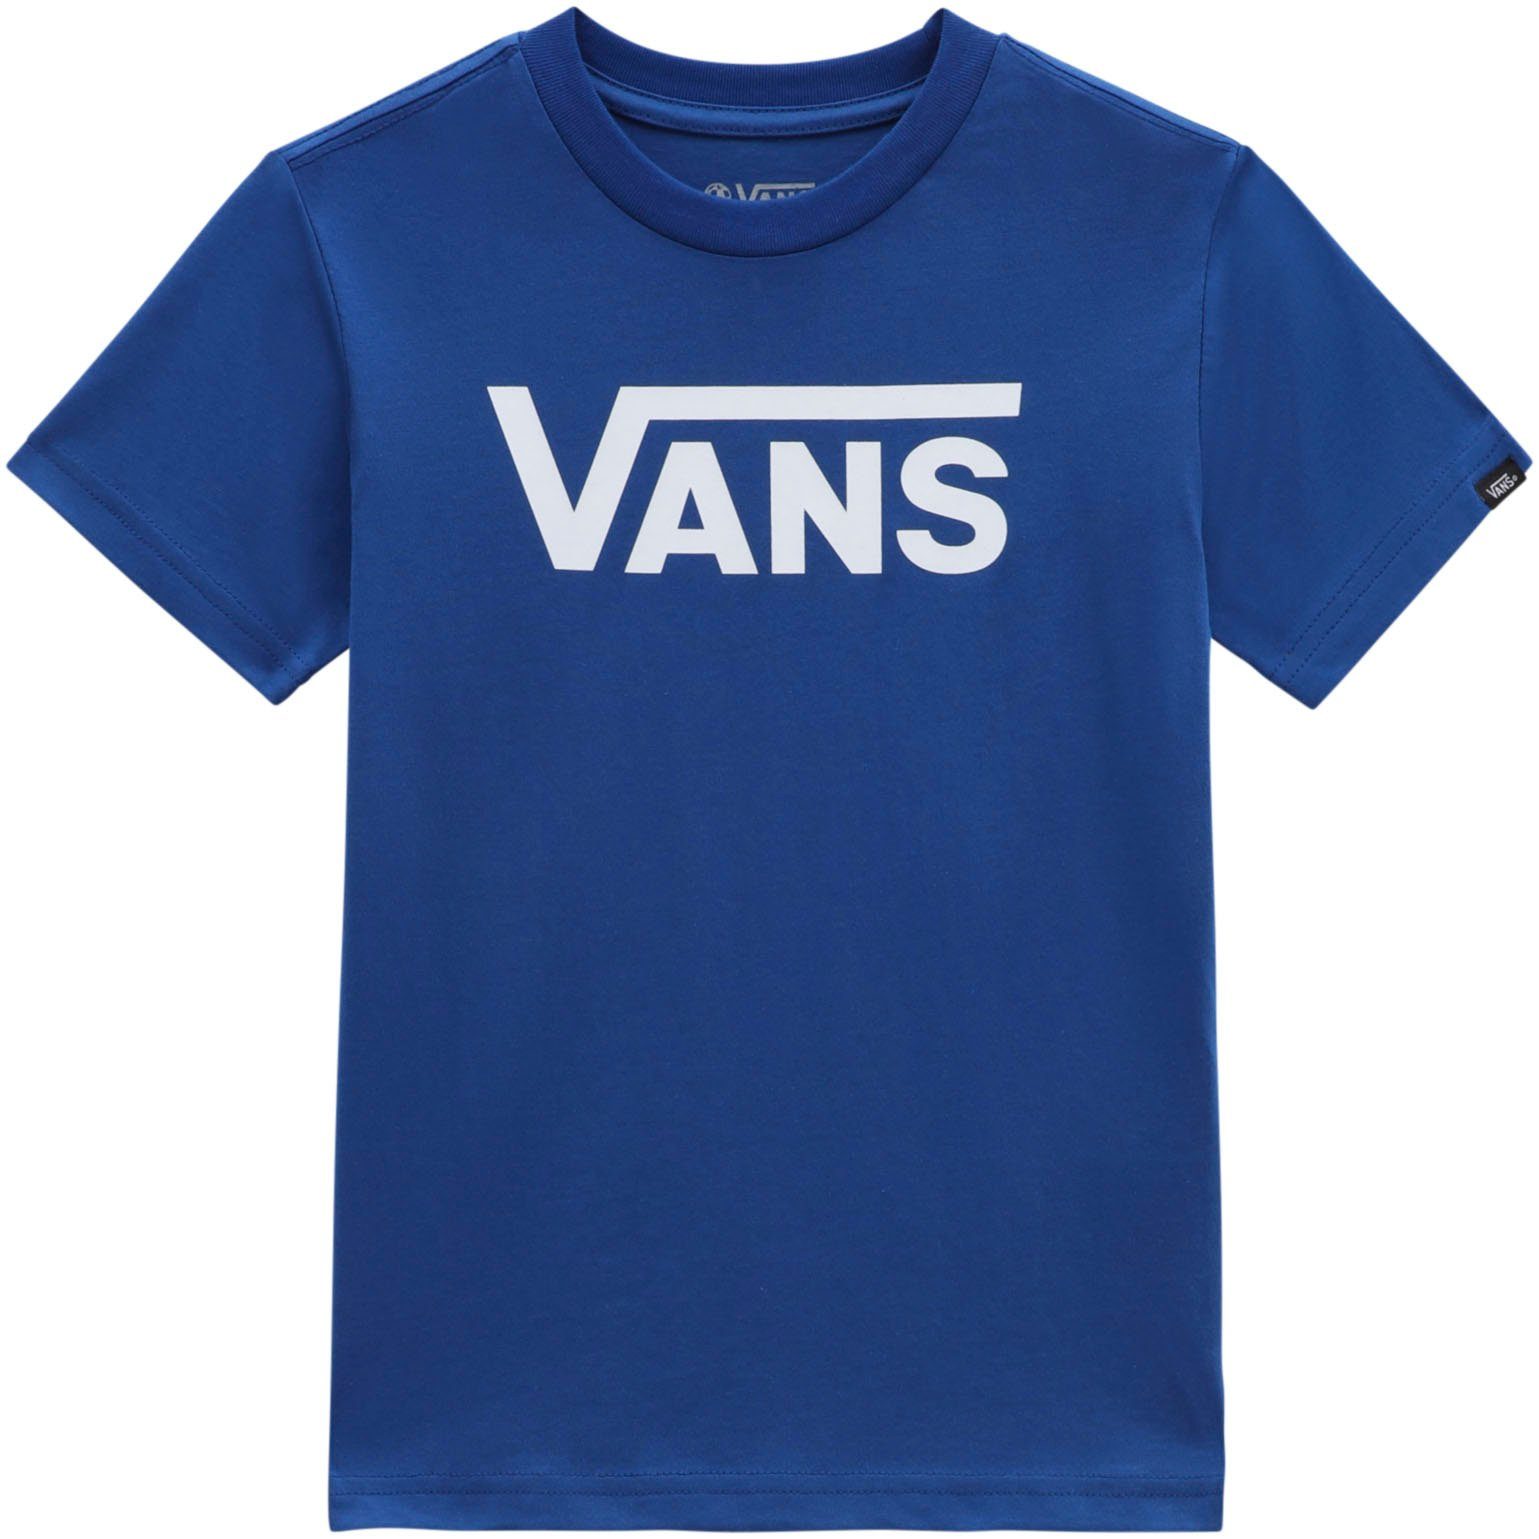 Vans T-Shirt BY VANS blue/ CLASSIC KIDS white